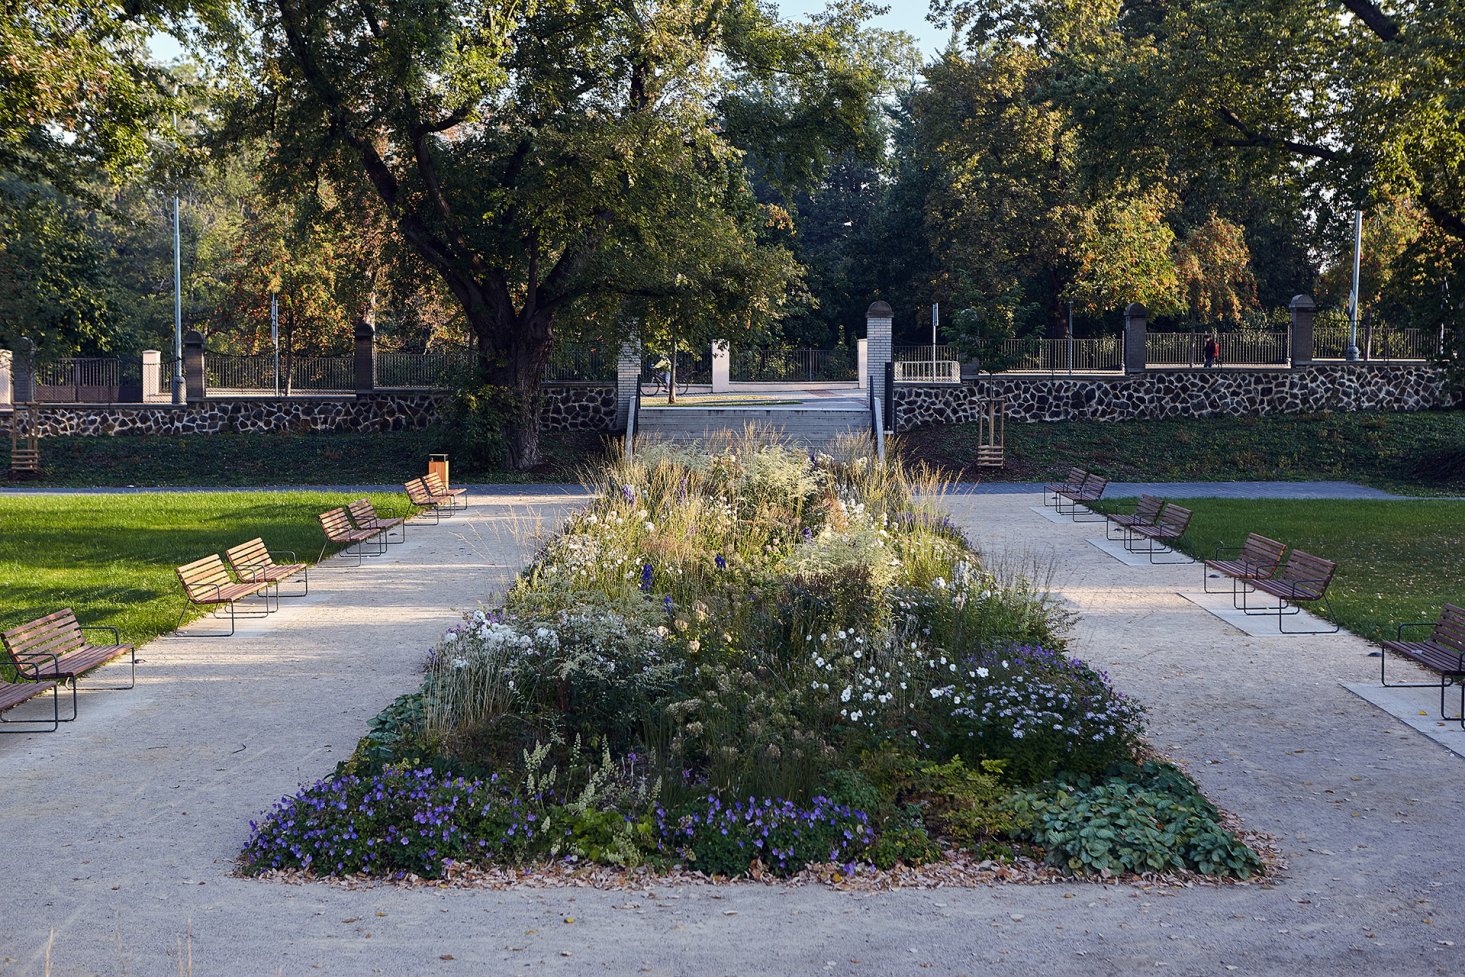 ‚Jan Hus‘ Park in Prague